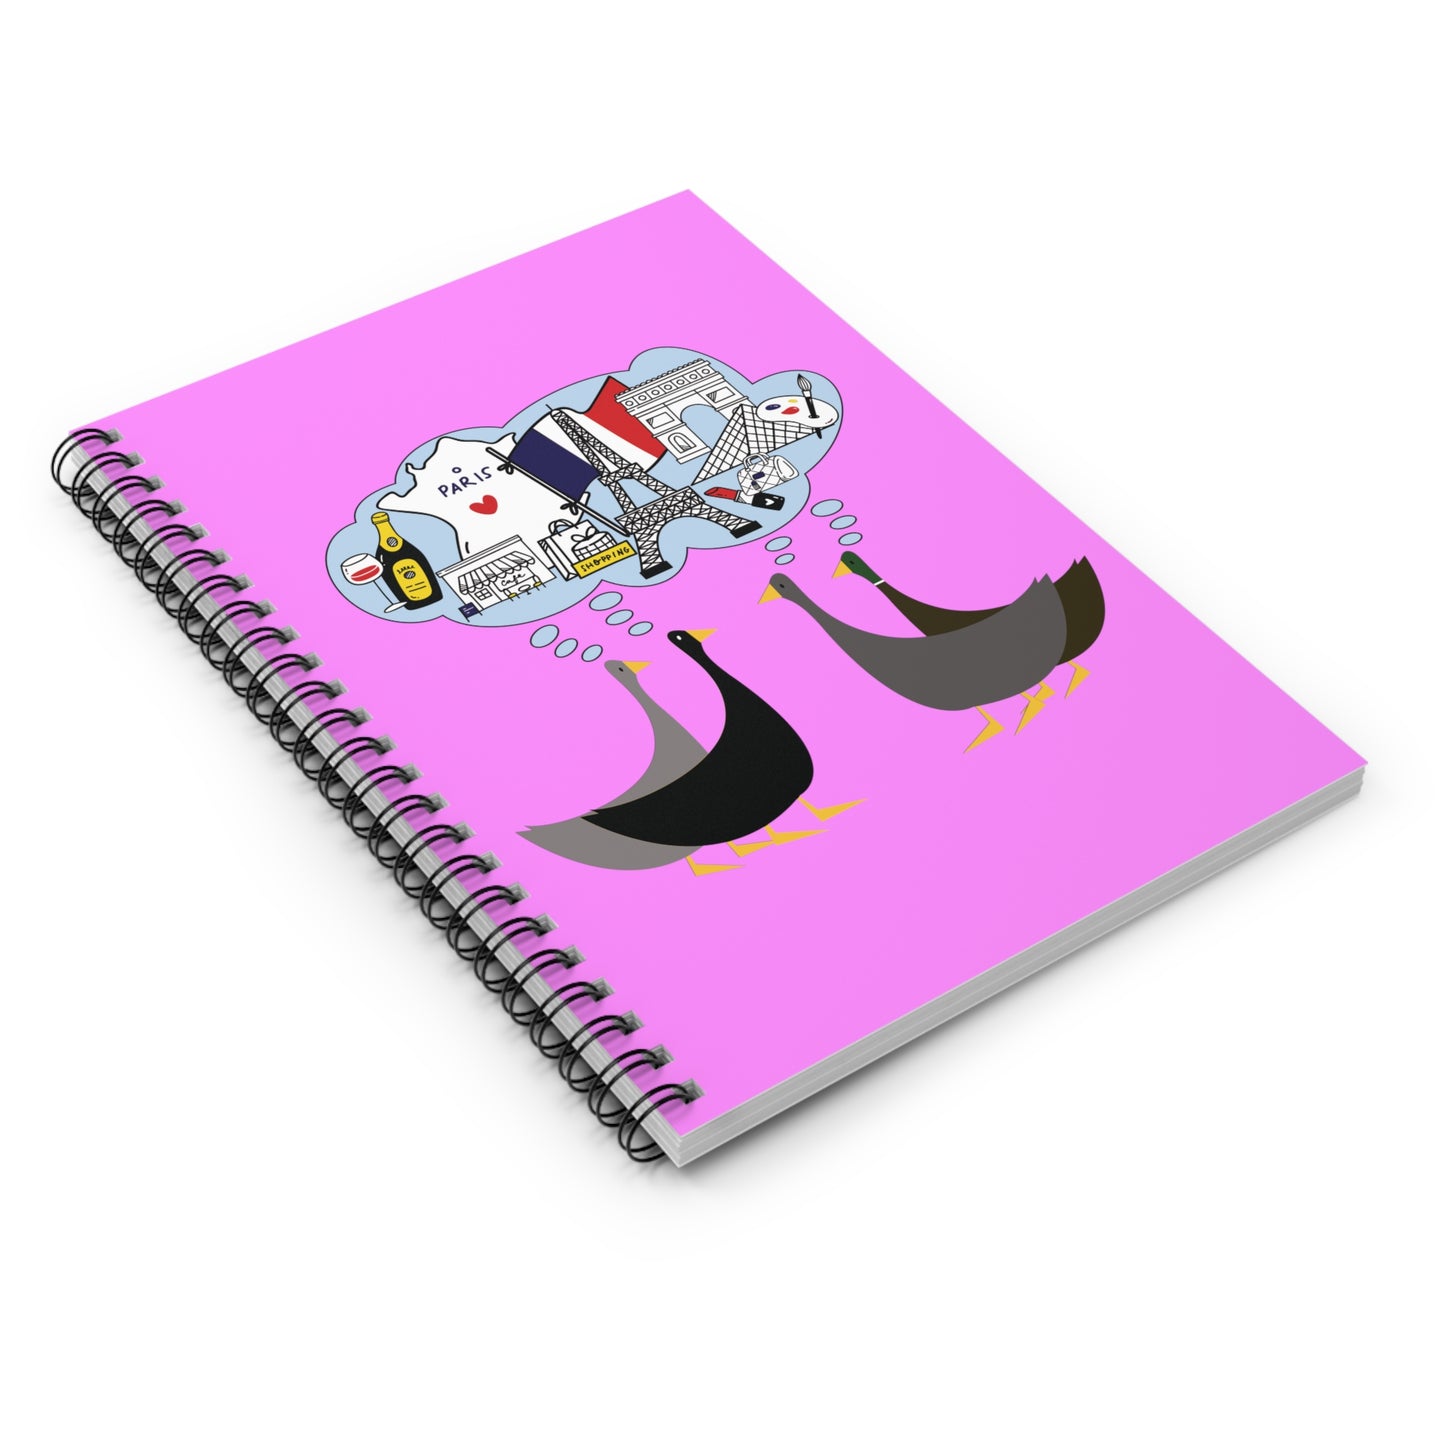 Ducks dreaming of Paris - Fuschia Pink ff8eff - Spiral Notebook - Ruled Line